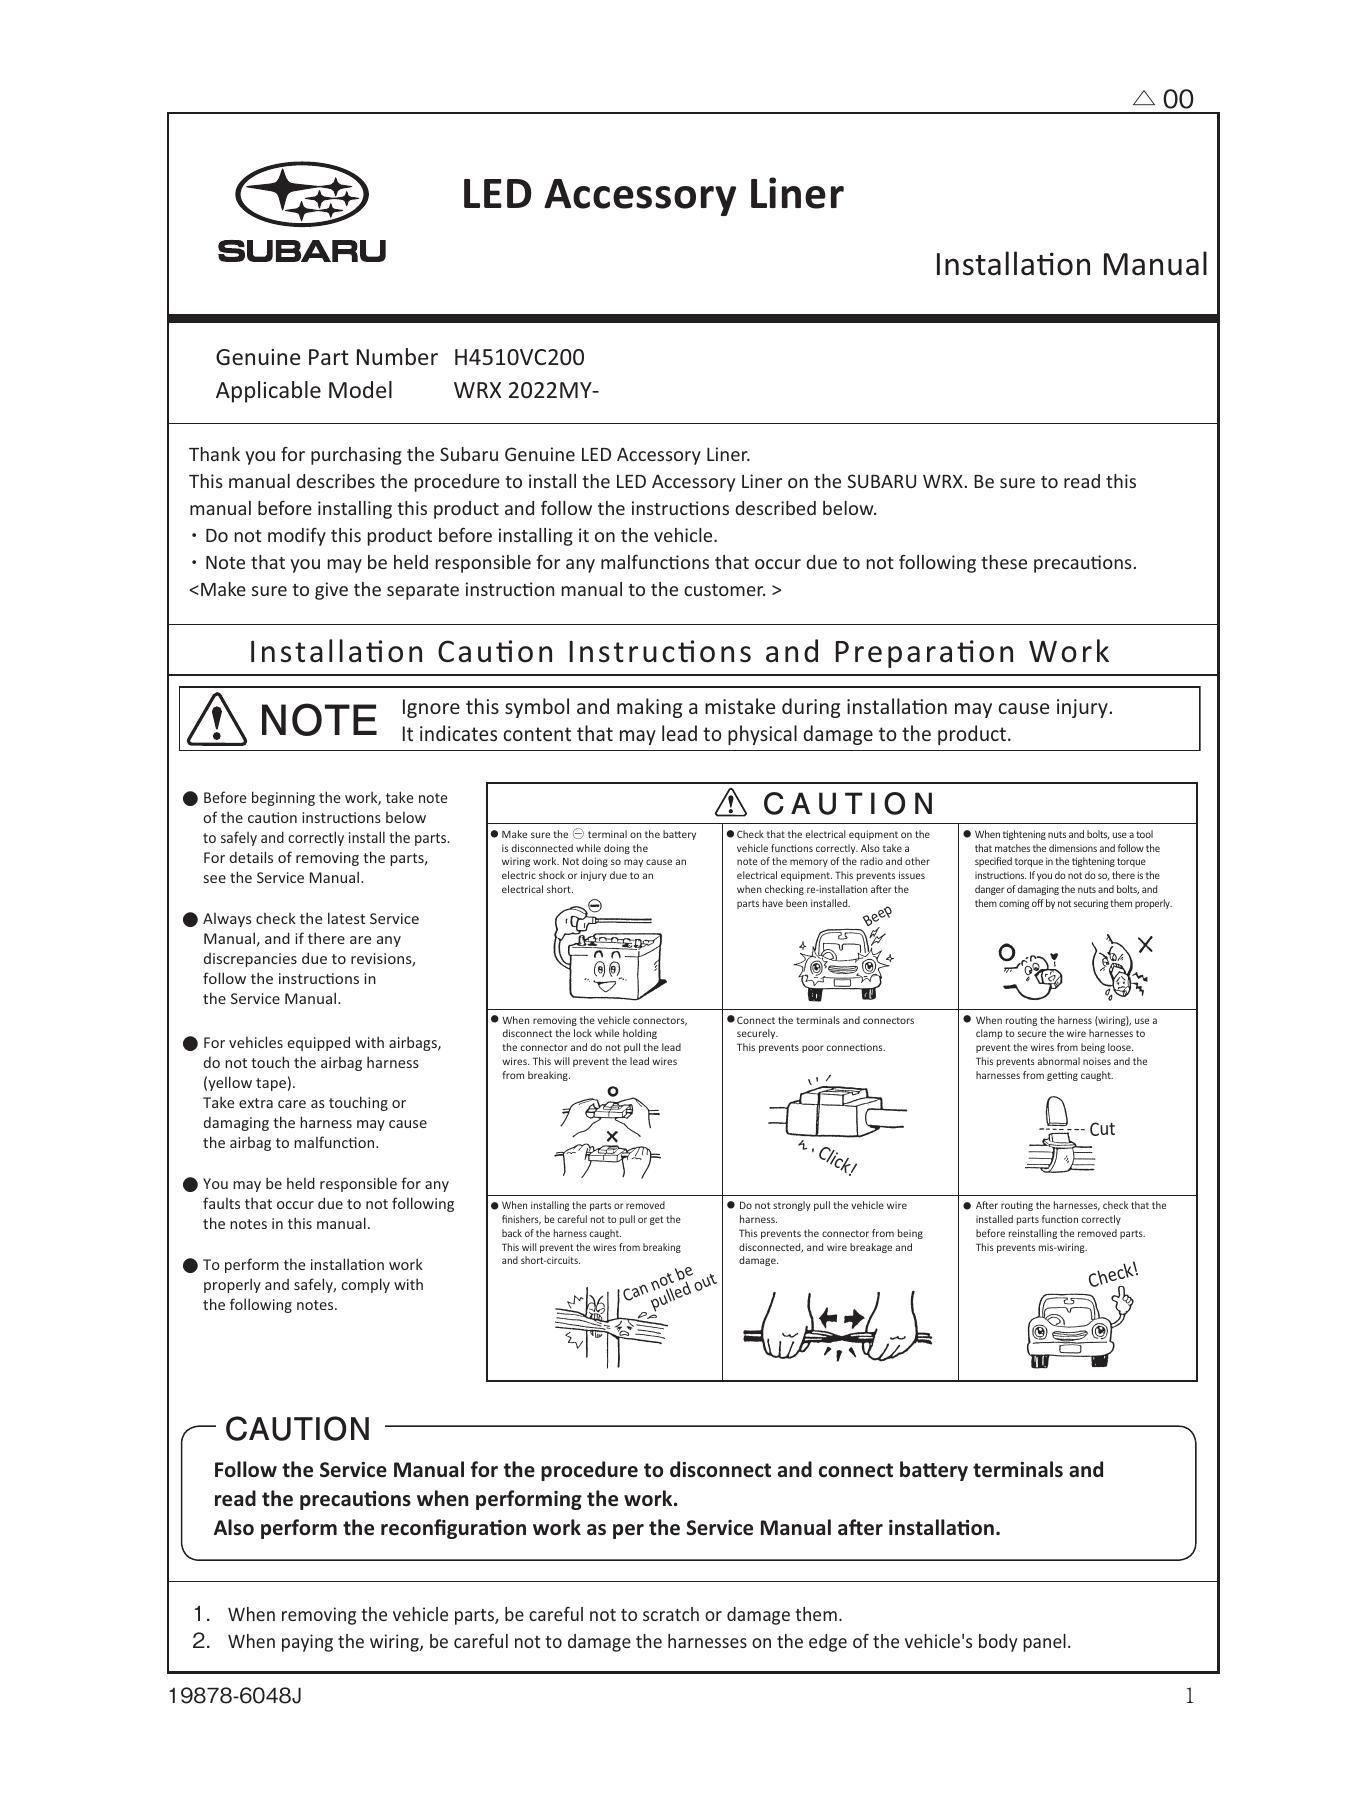 installation-manual-for-subaru-wrx-2022my-led-accessory-liner.pdf